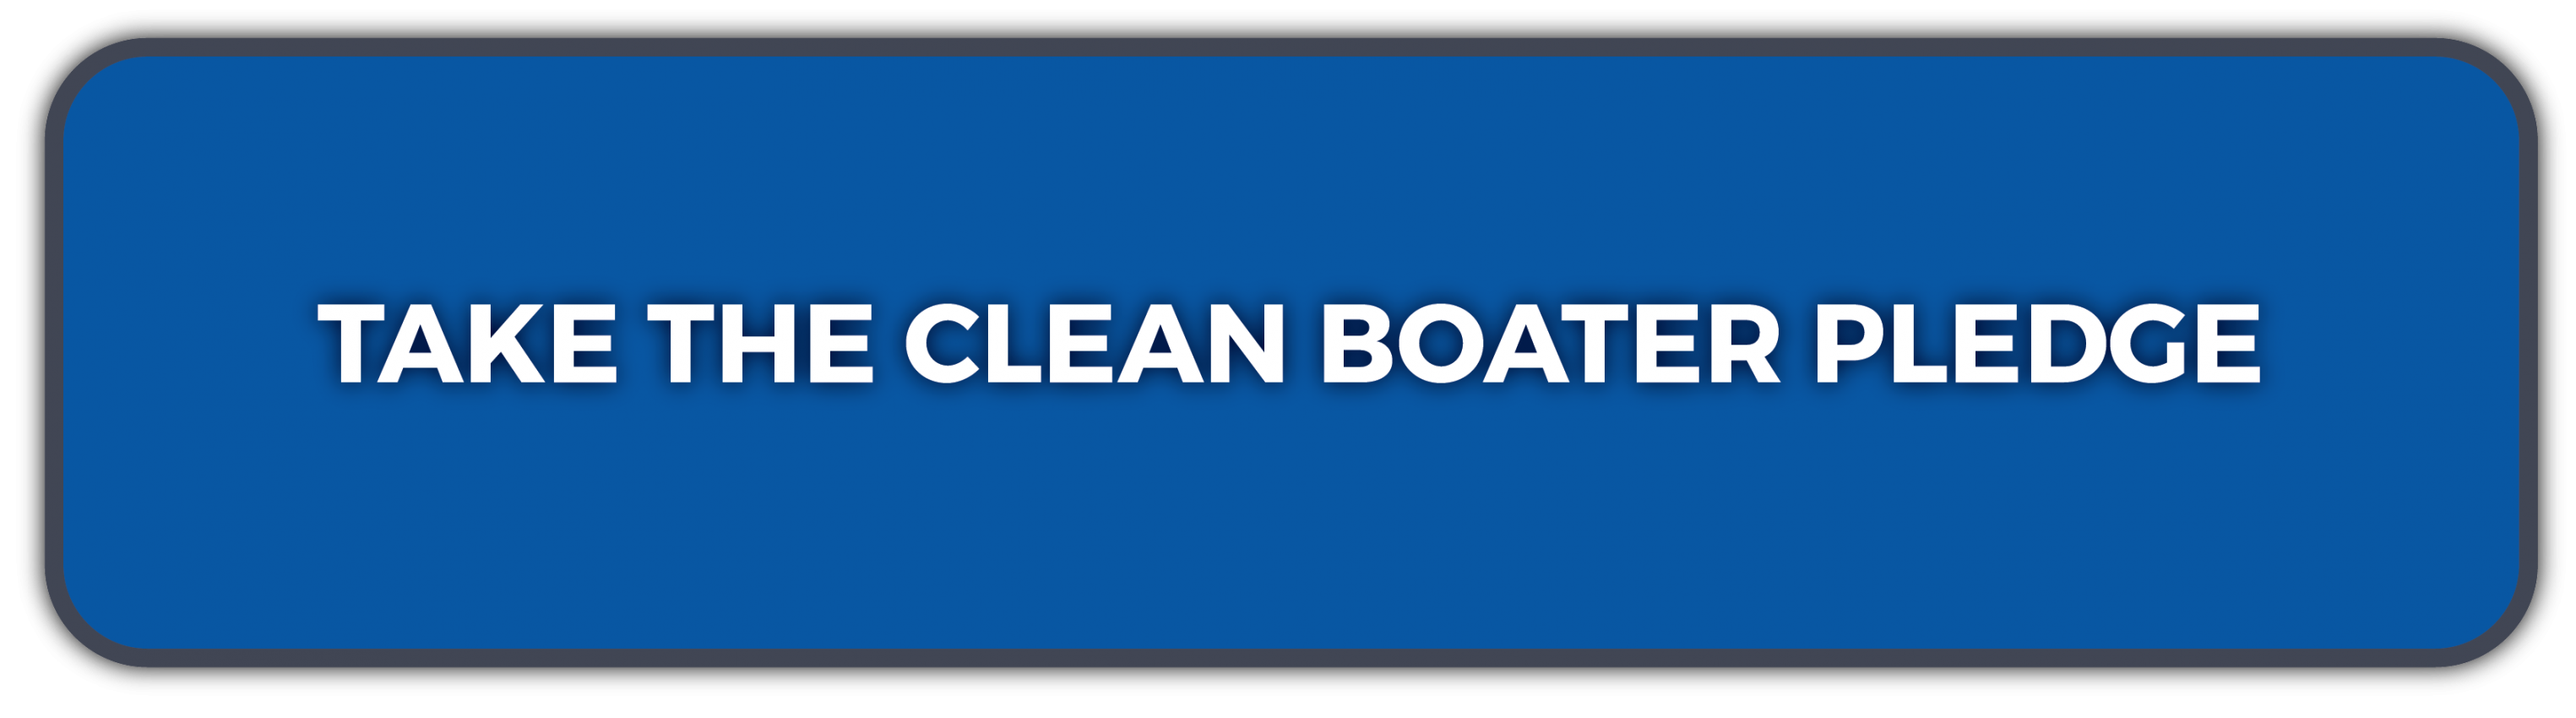 Clean Boater Pledge button